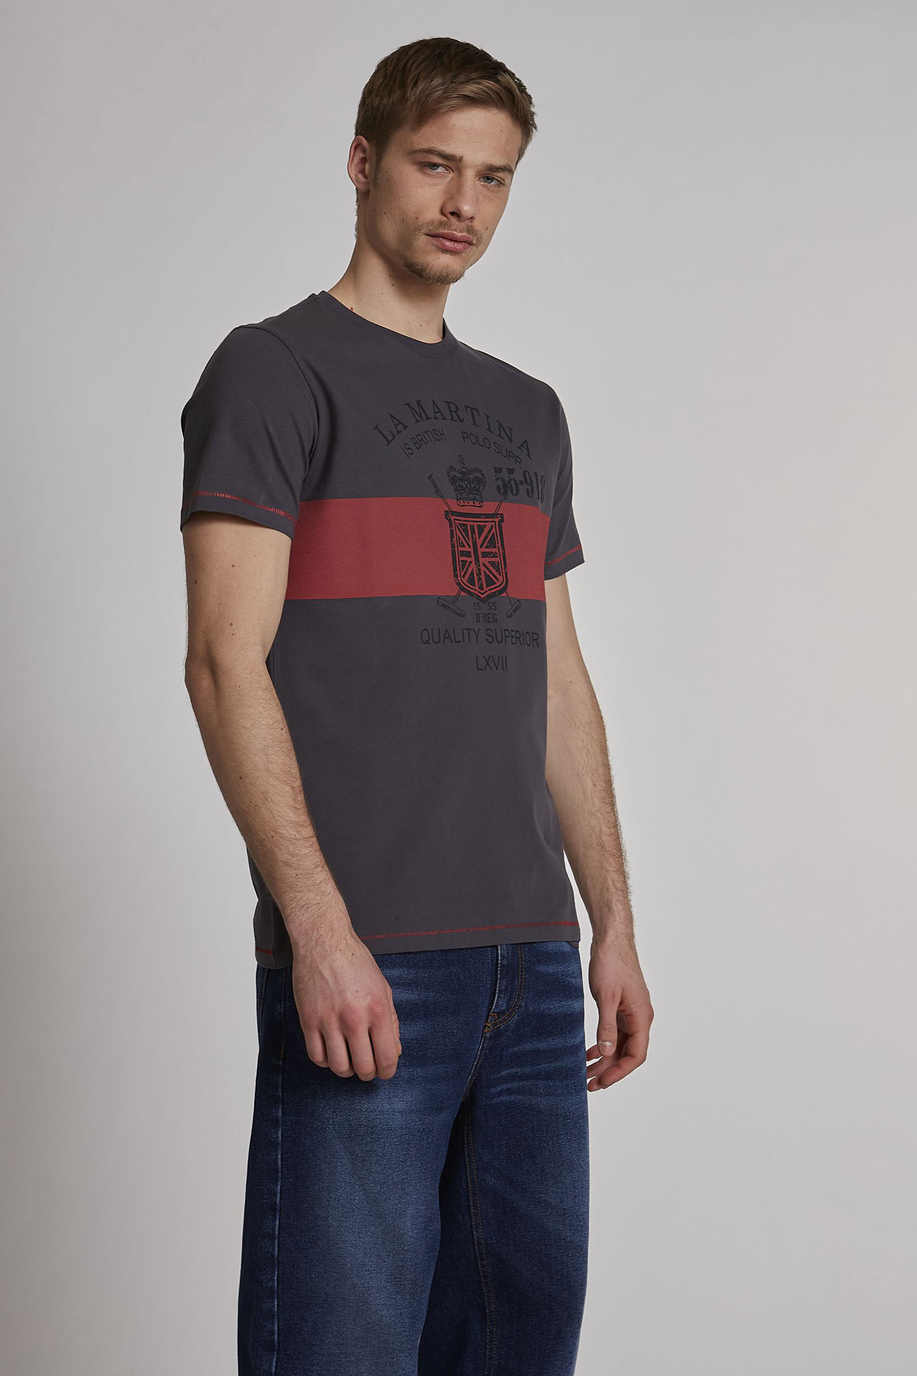 Men's short-sleeved regular-fit cotton T-shirt - T-Shirts | La Martina - Official Online Shop